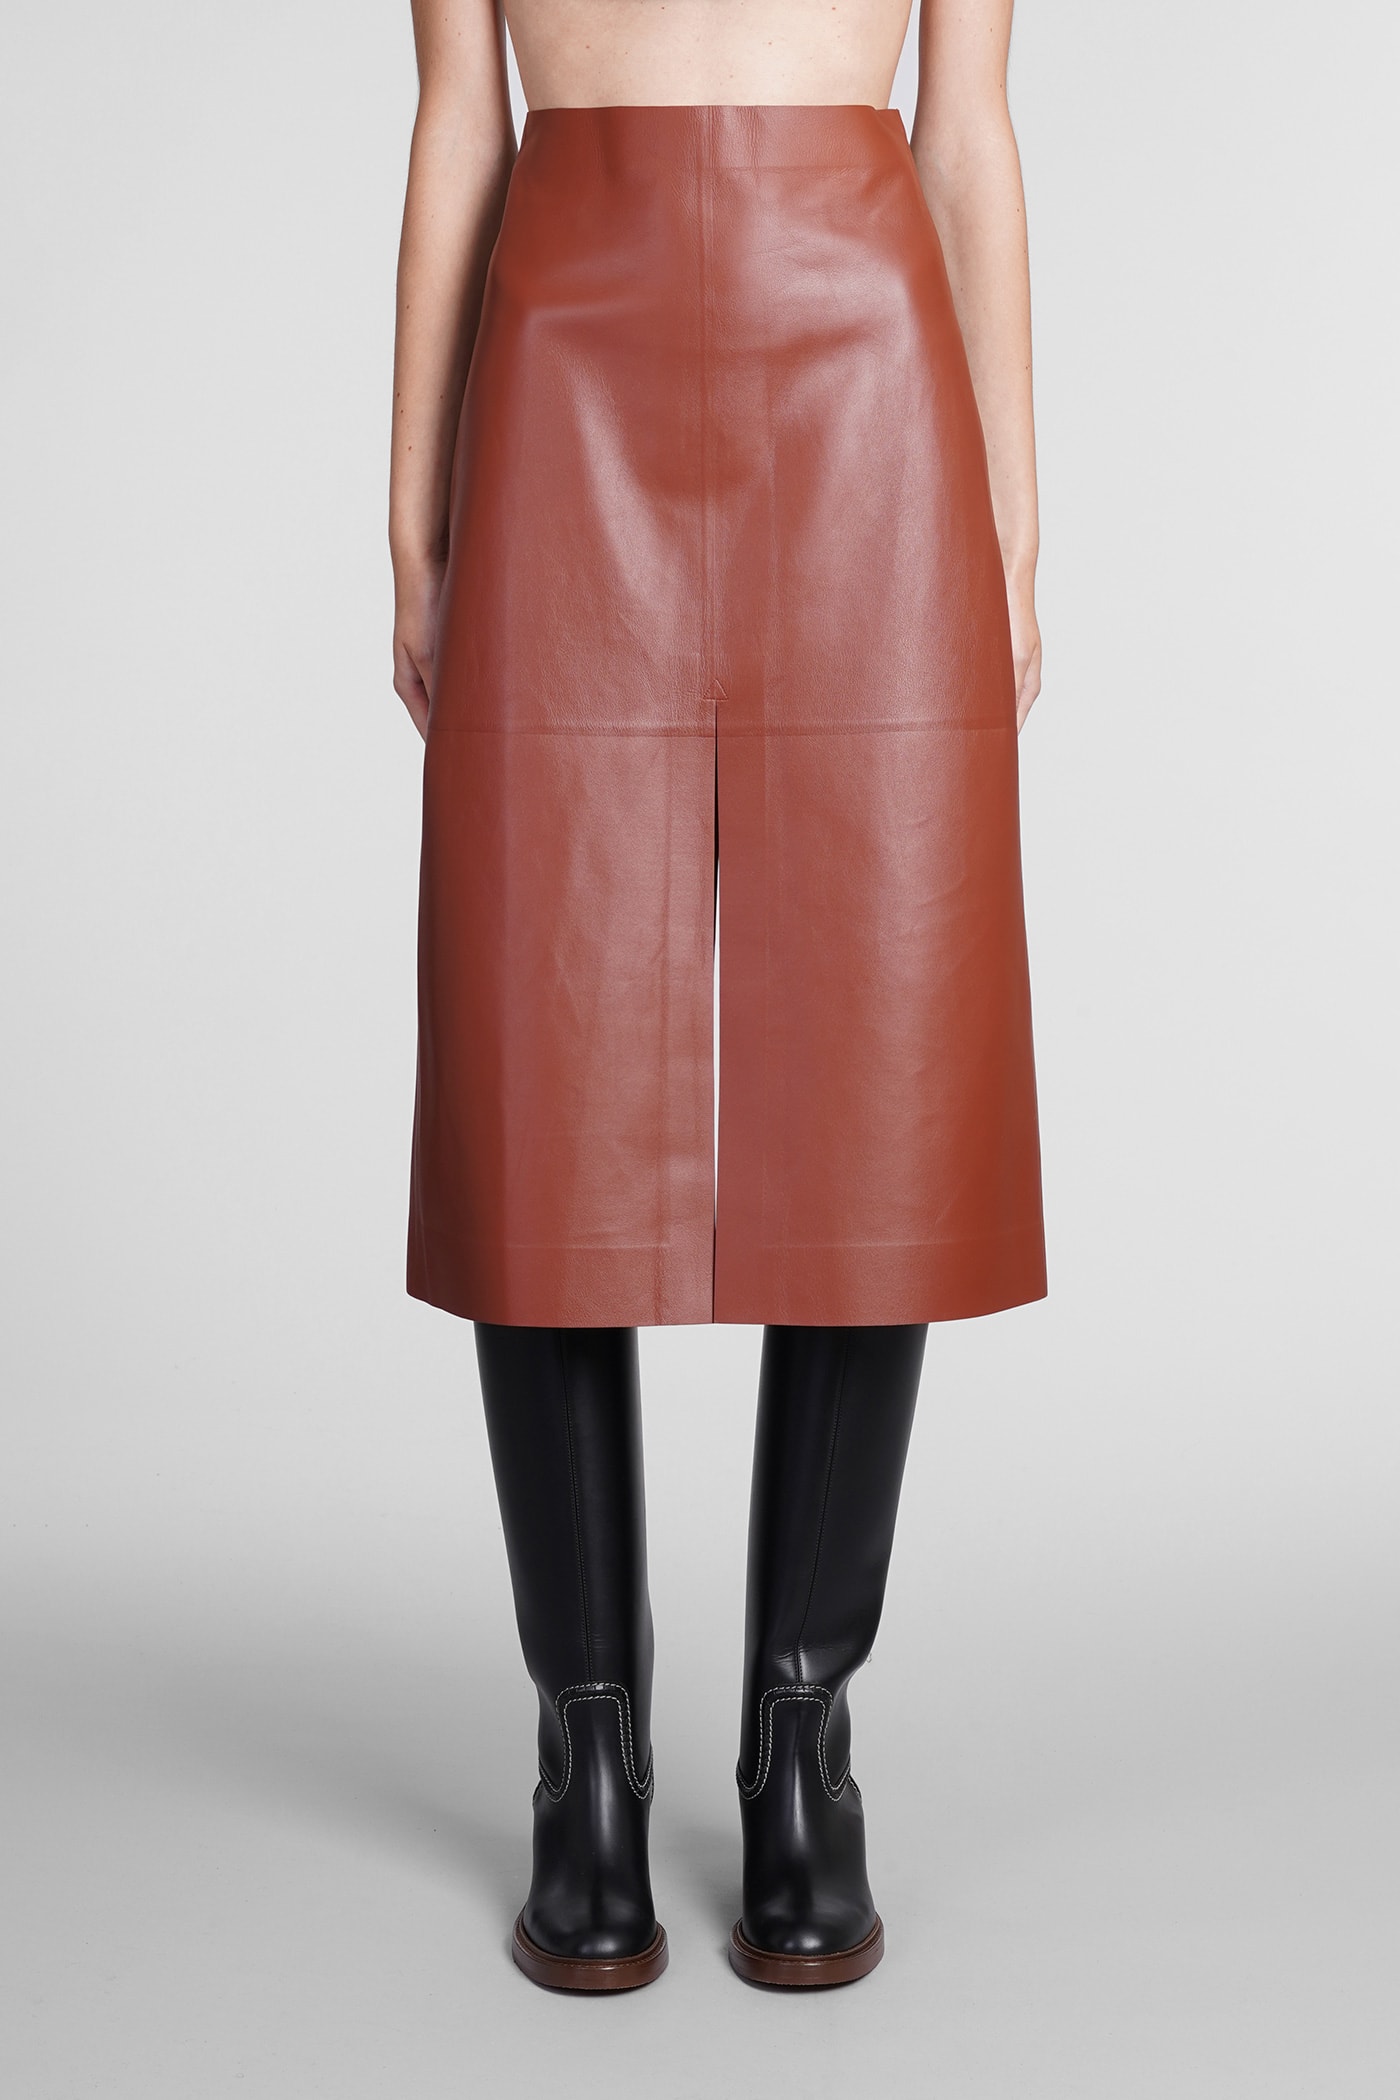 Chloé Skirt In Bordeaux Leather